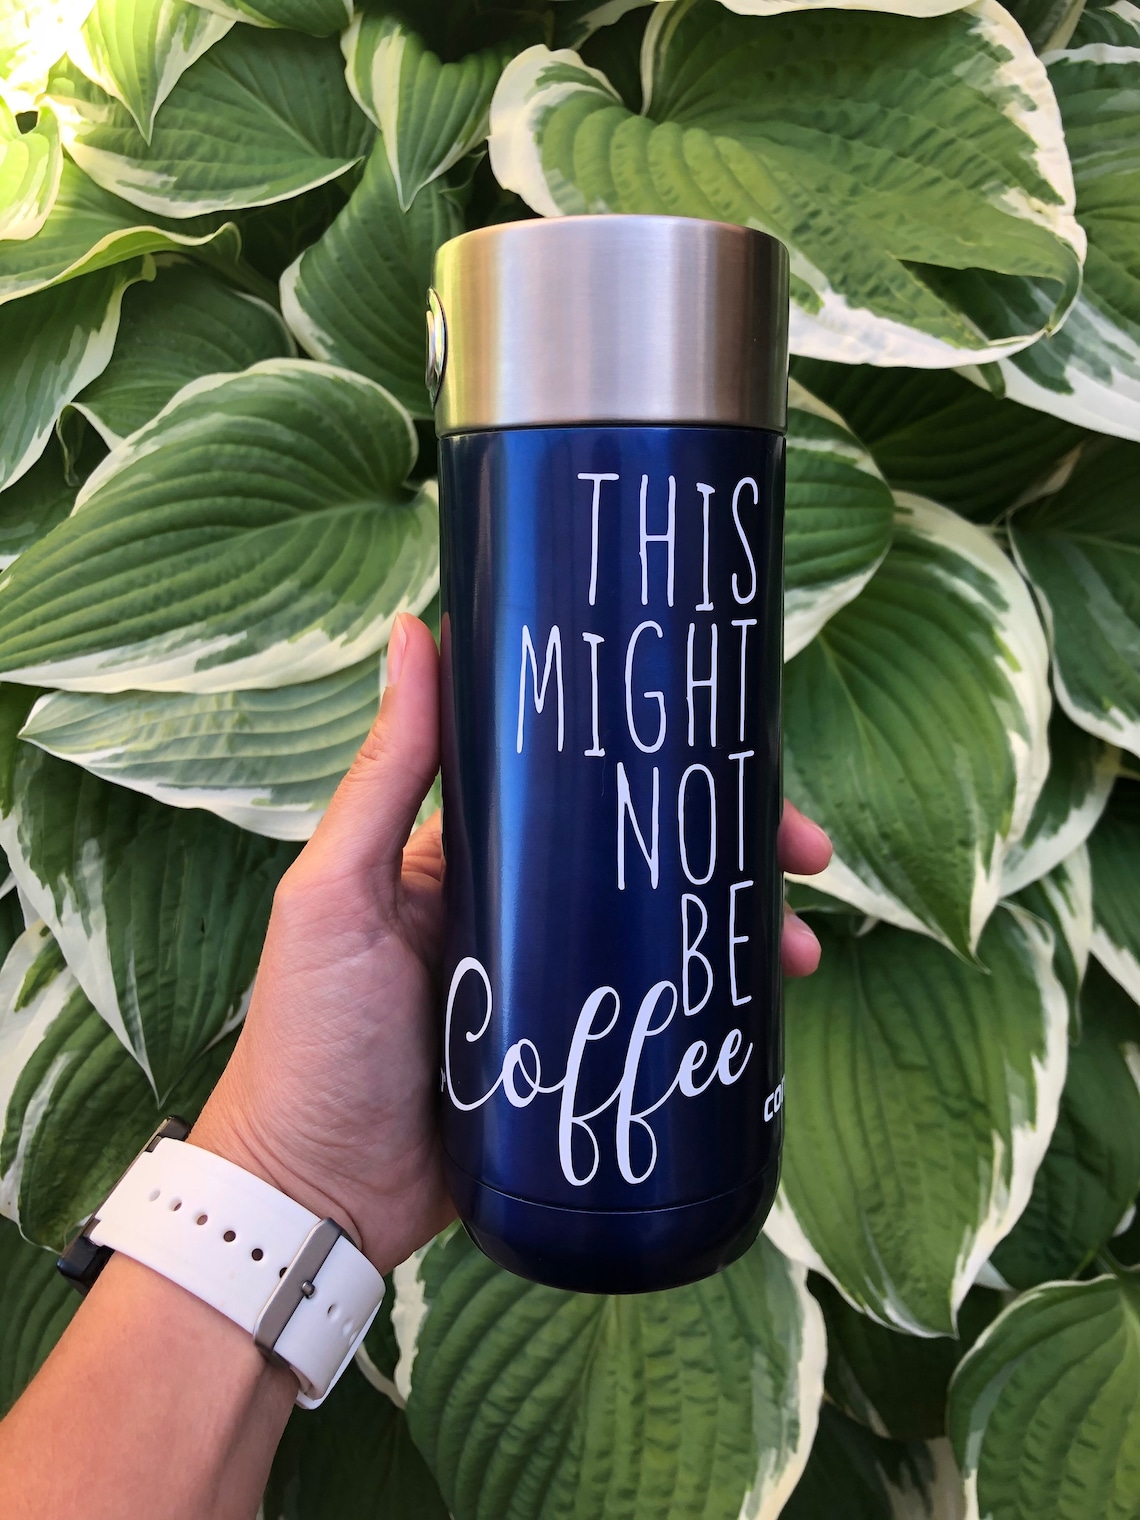 personalized travel coffee mugs canada